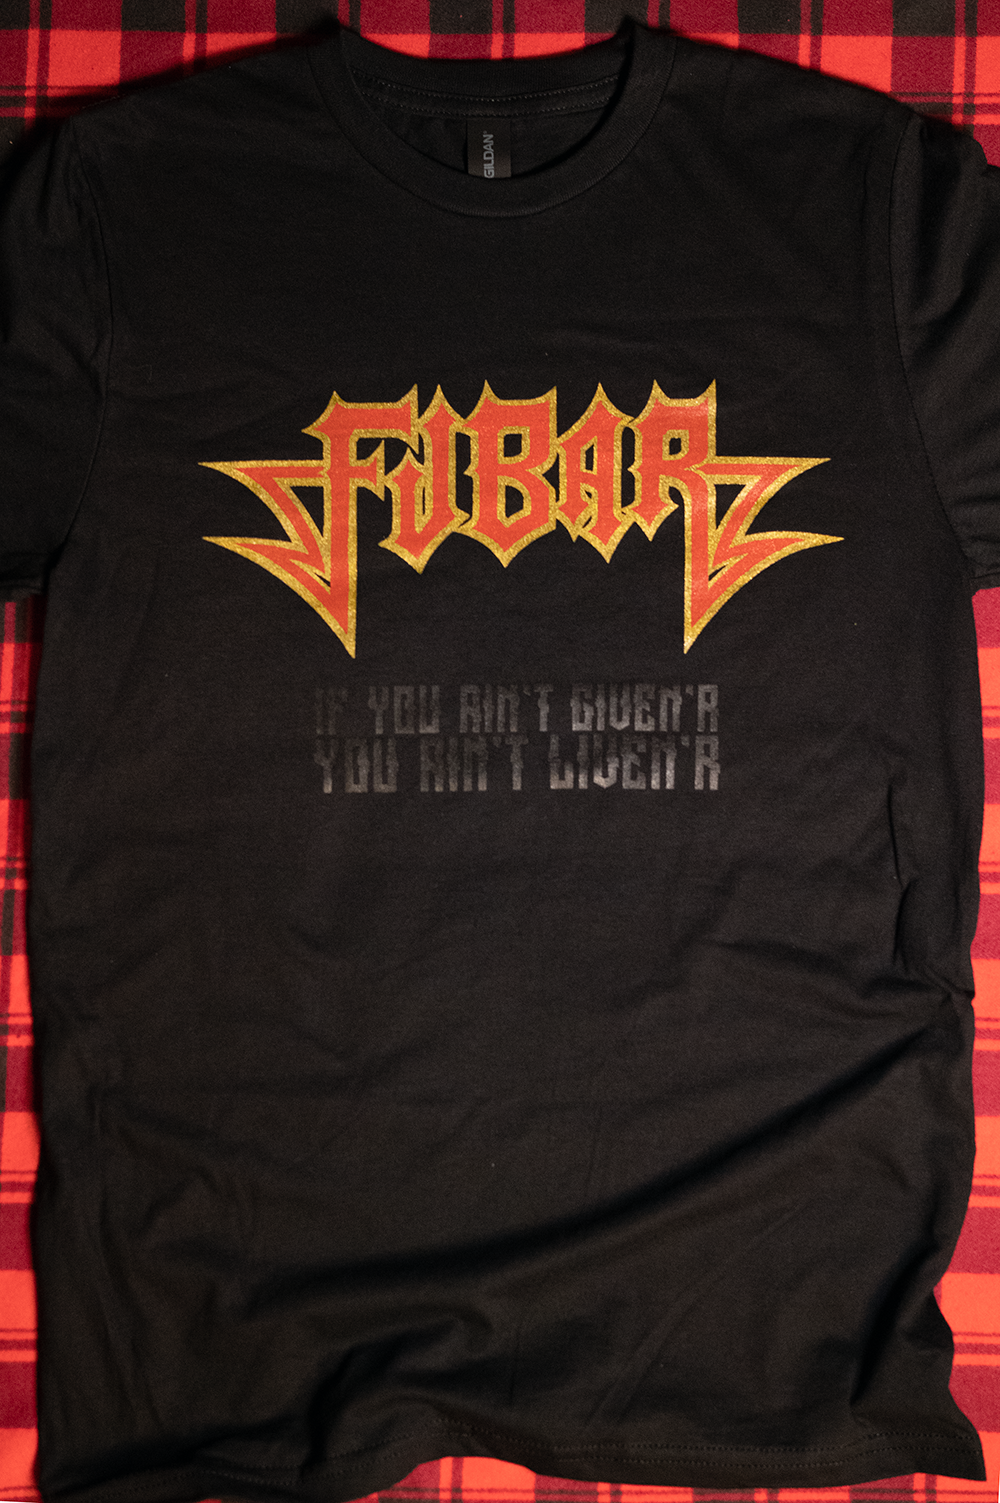 FUBAR Short Sleeve t-shirt, with black on black - 